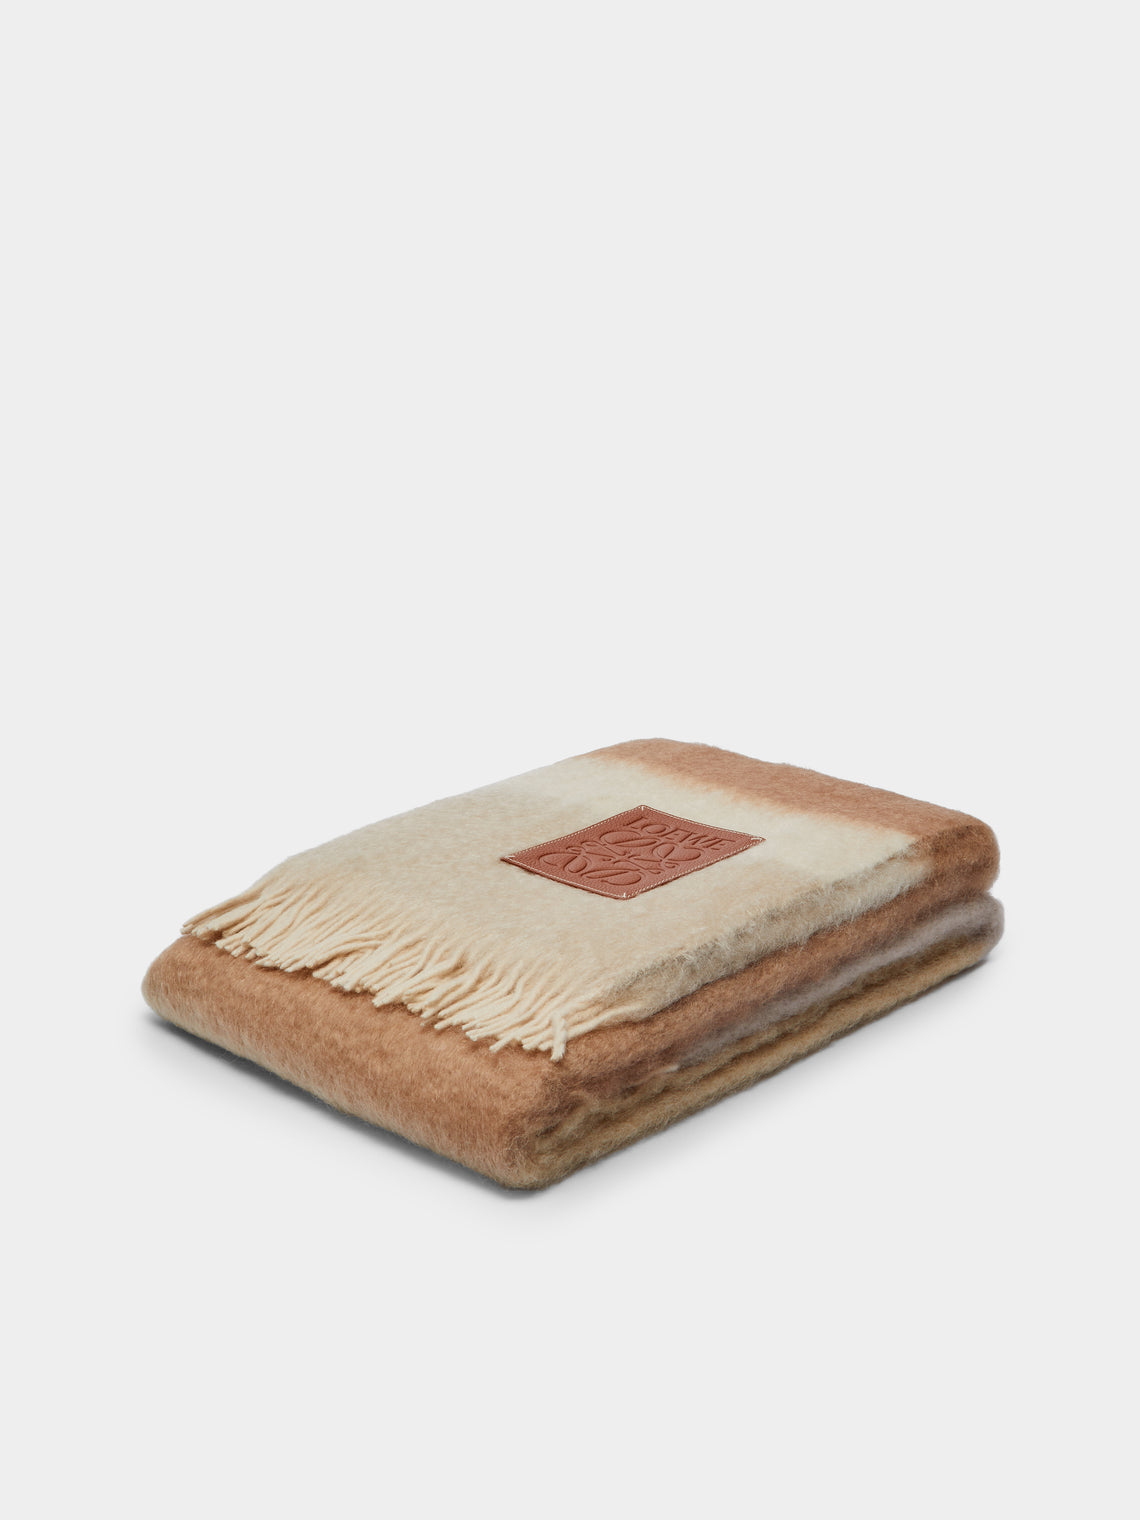 Loewe Home - Wool and Linen Striped Blanket -  - ABASK